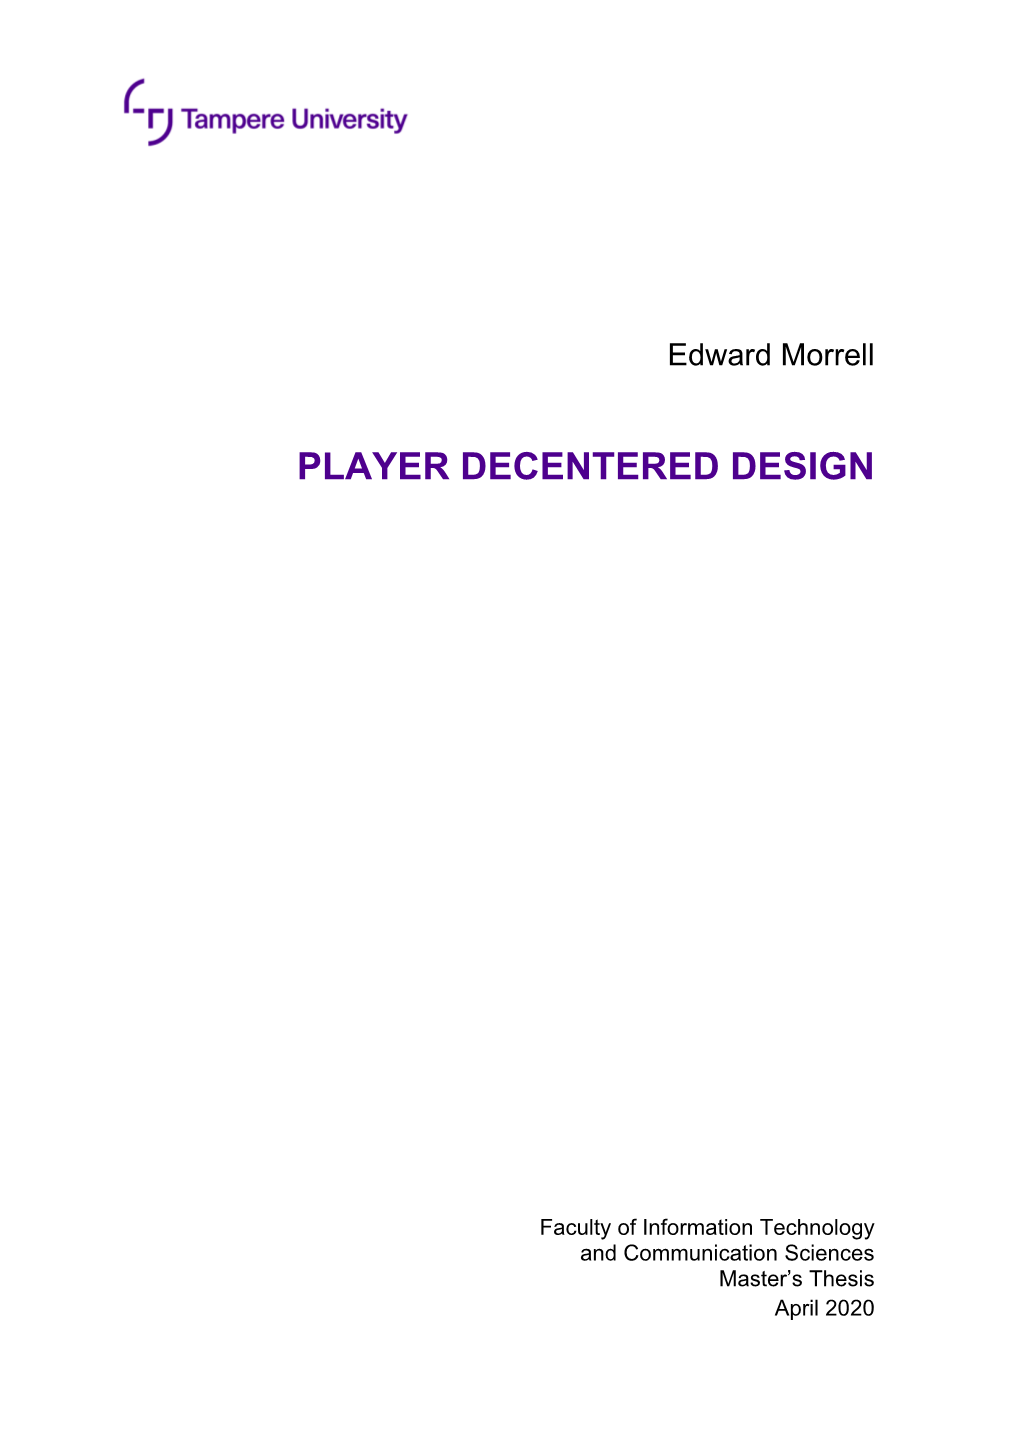 Player Decentered Design